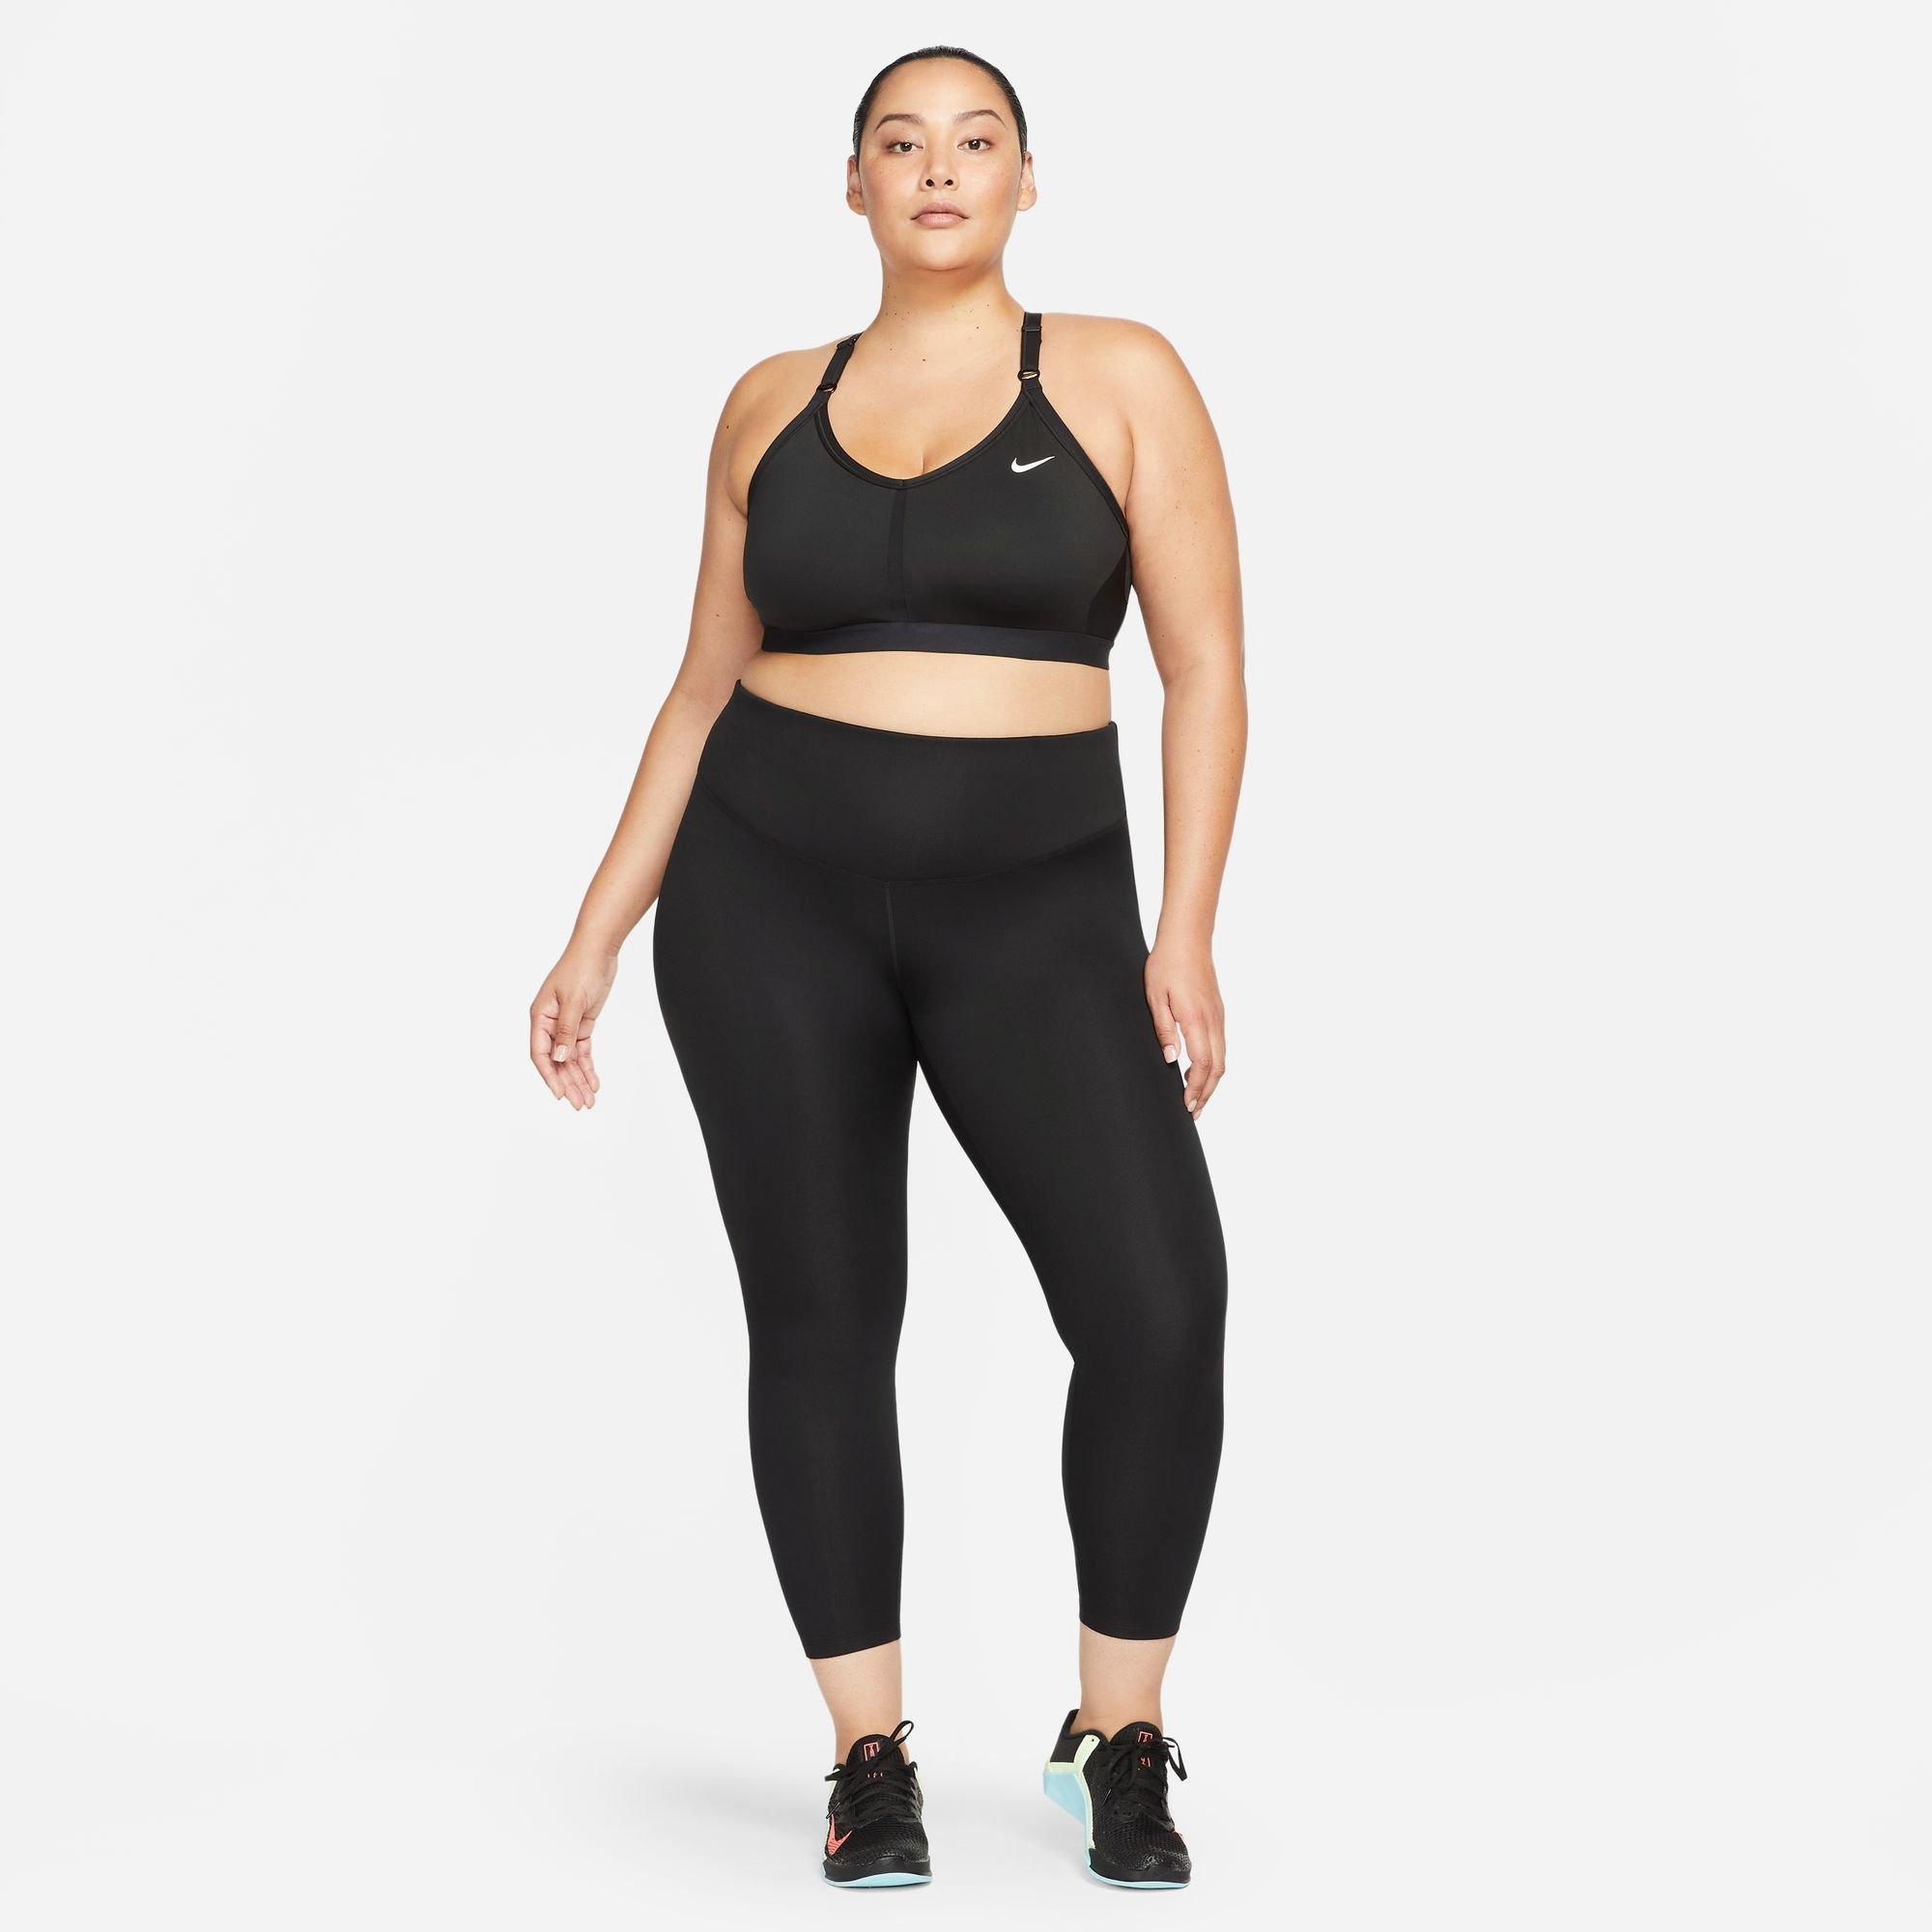 Women's Plus Size Dri-FIT Indy Bra from Nike